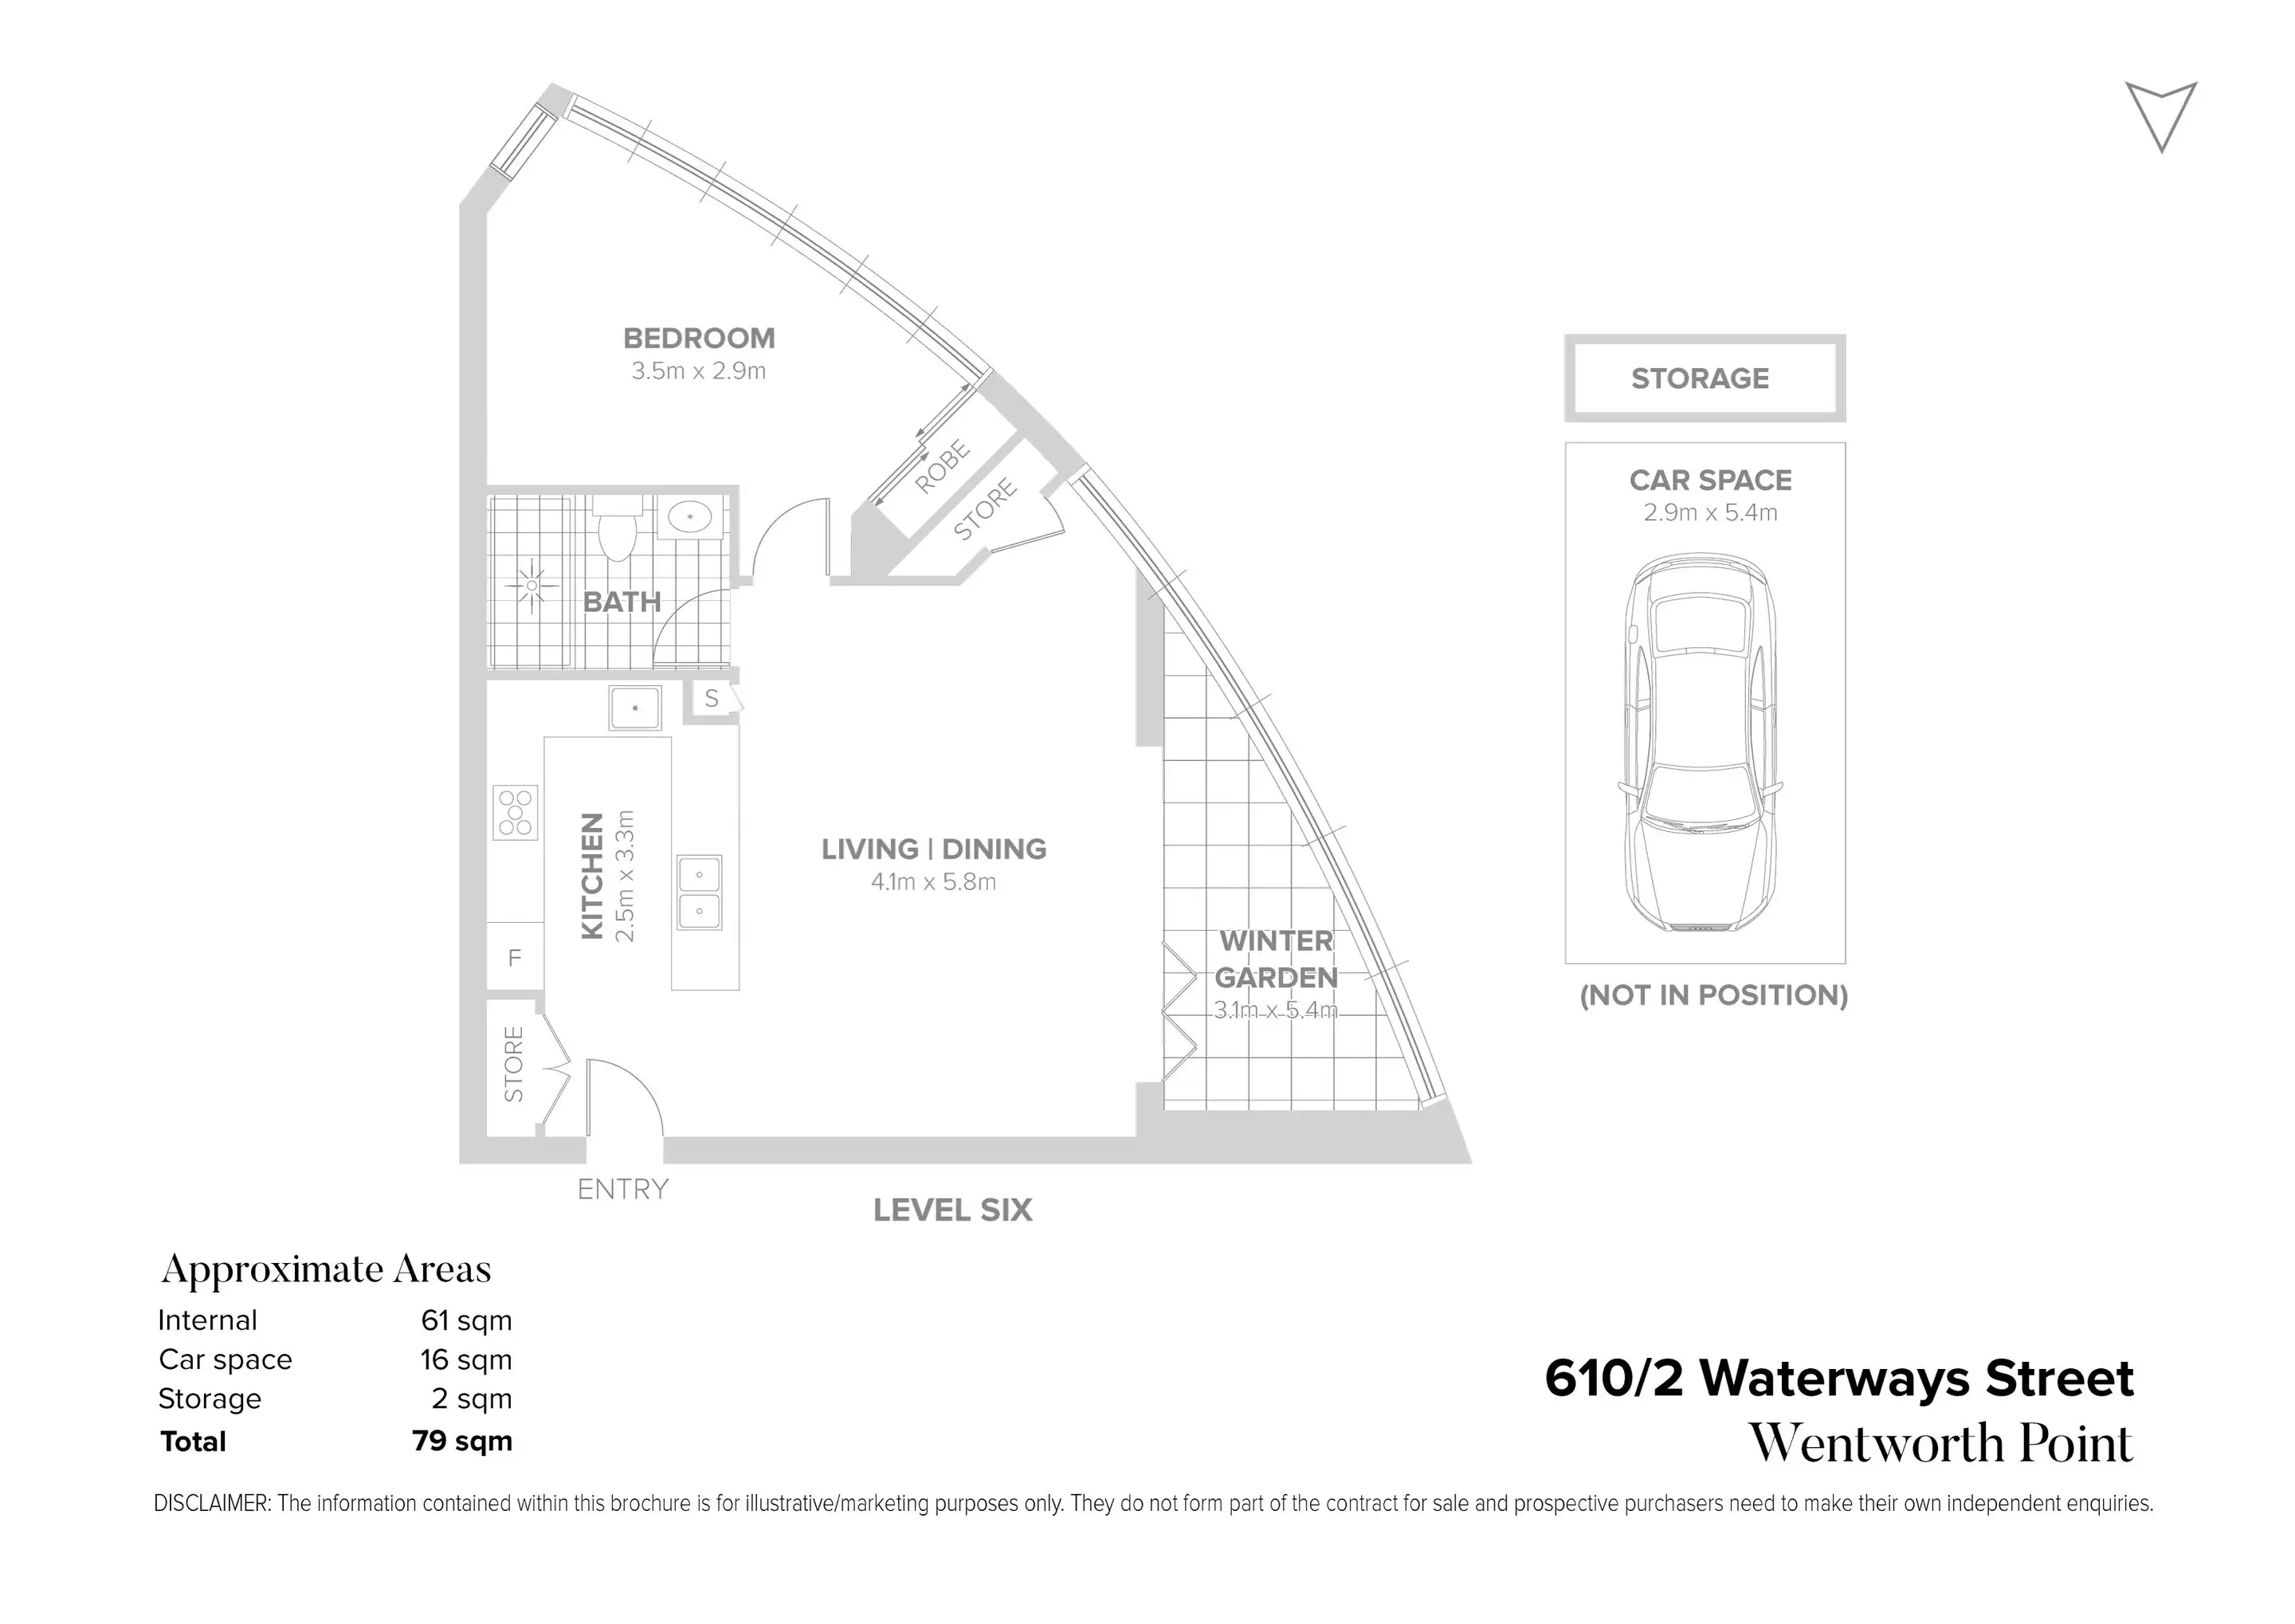 610/2 Waterways Street, Wentworth Point Sold by Chidiac Realty - floorplan